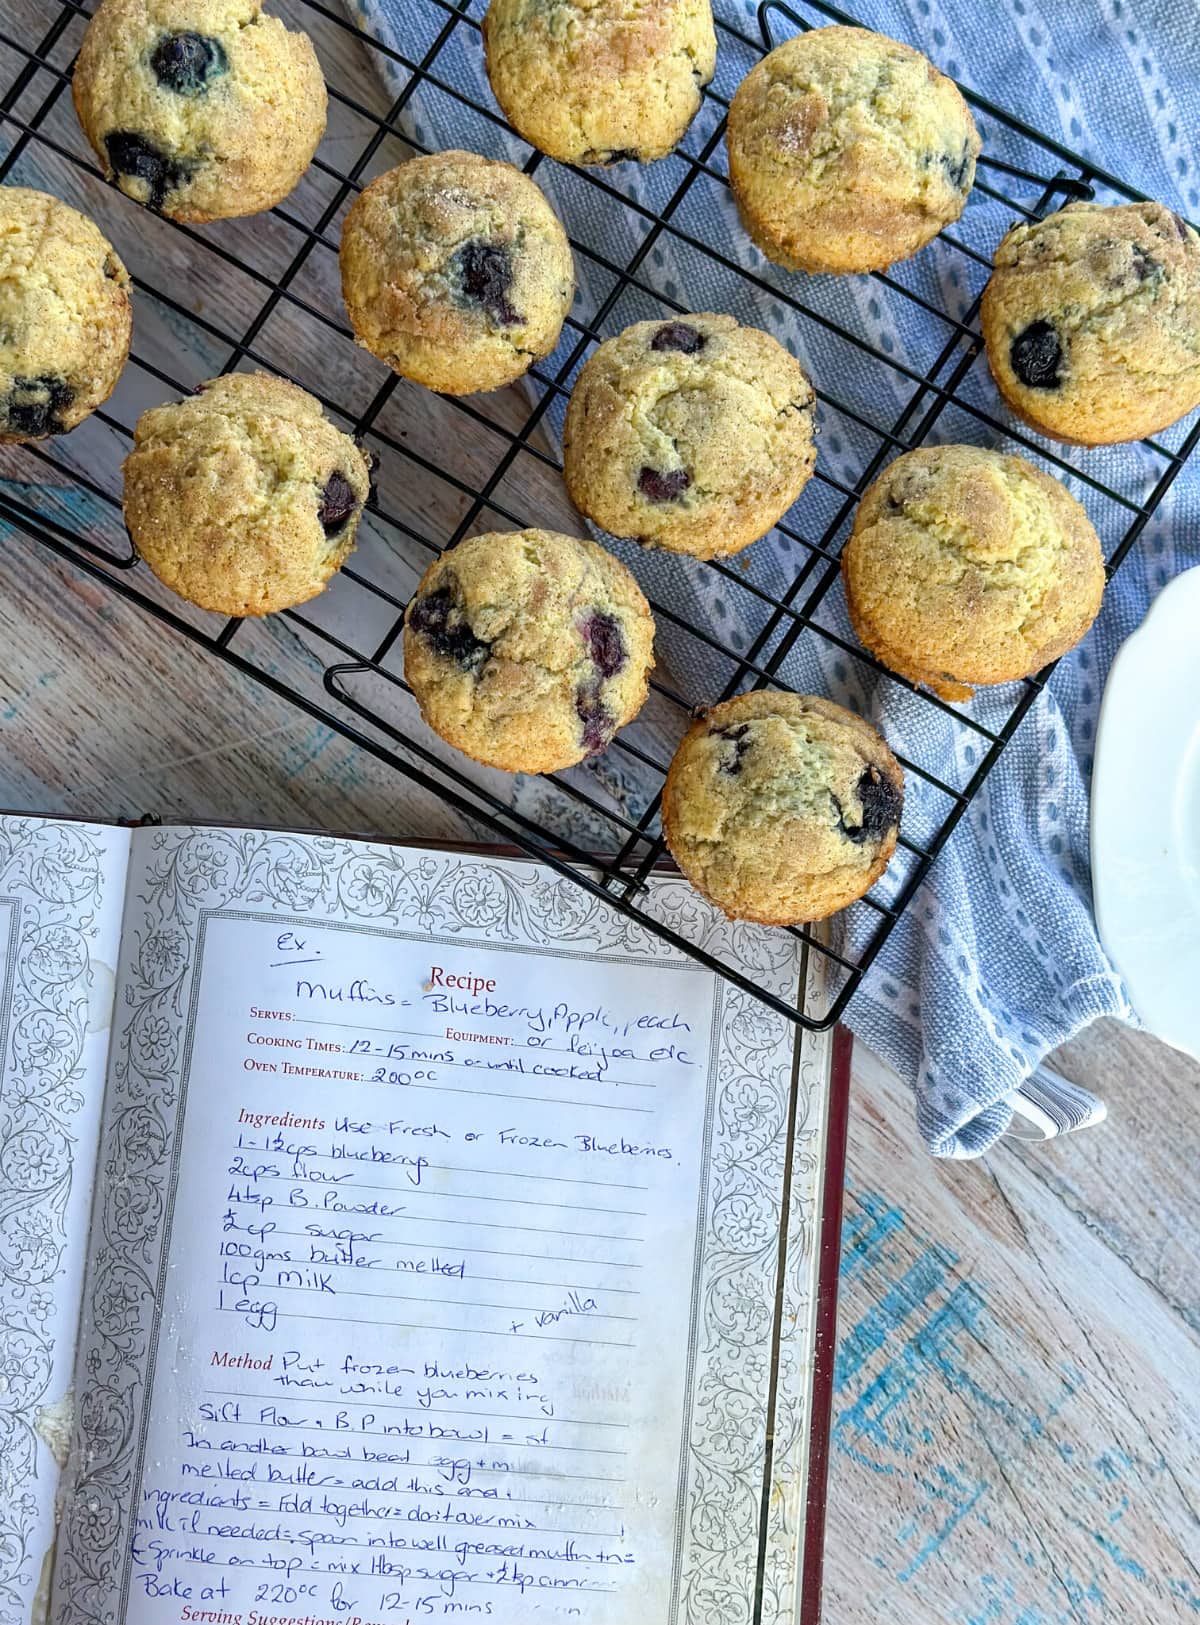 Handwritten recipe for Blueberry muffins from Just A Mums Mum 